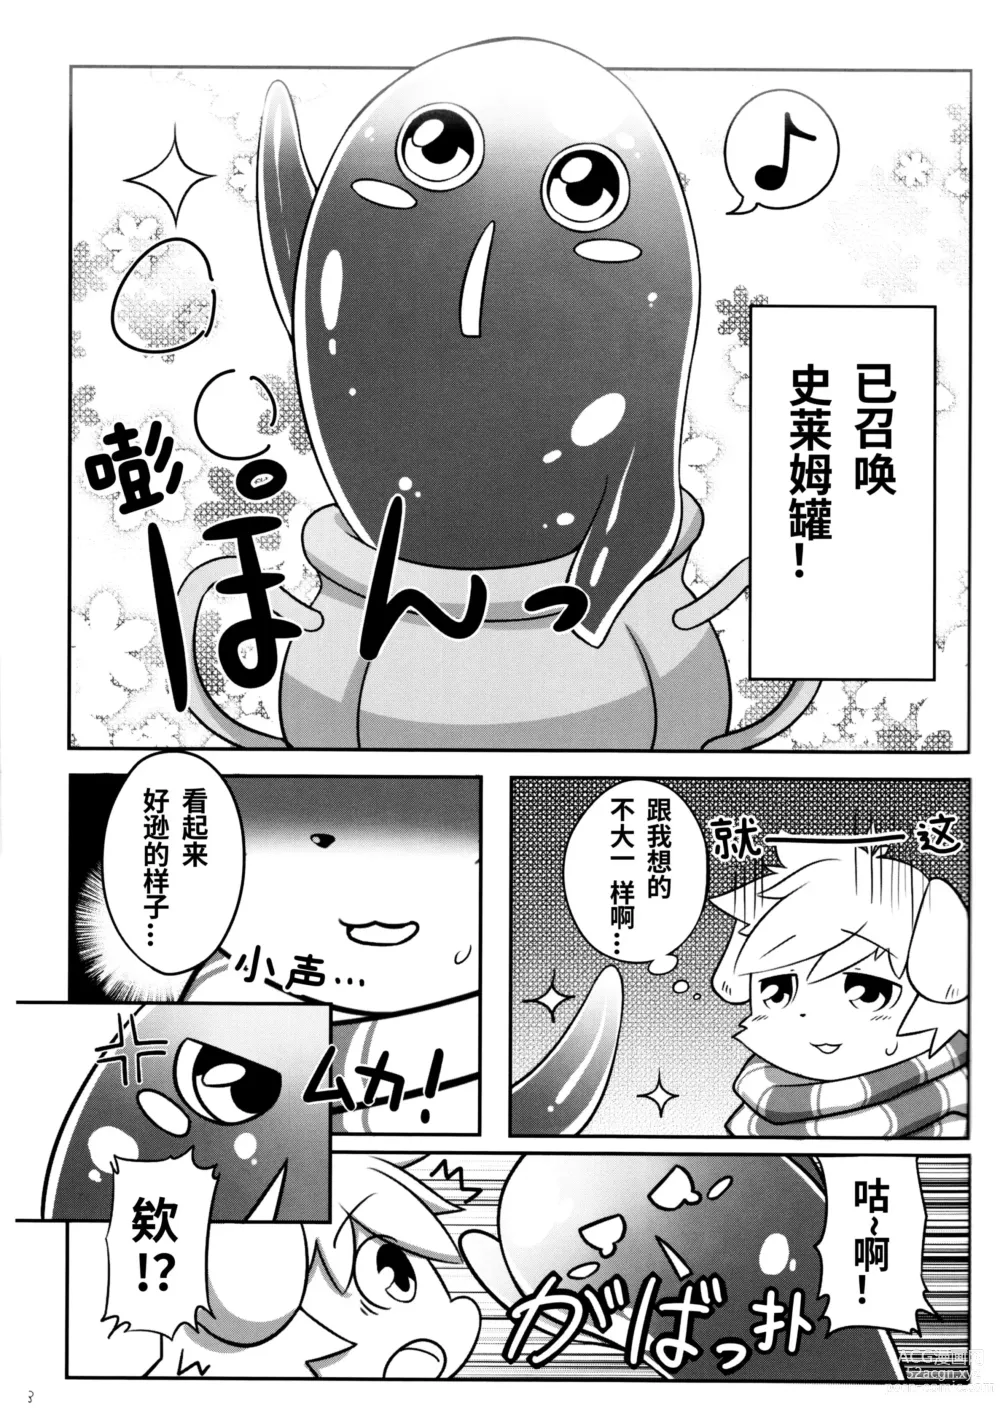 Page 4 of doujinshi SUMMON PANIC